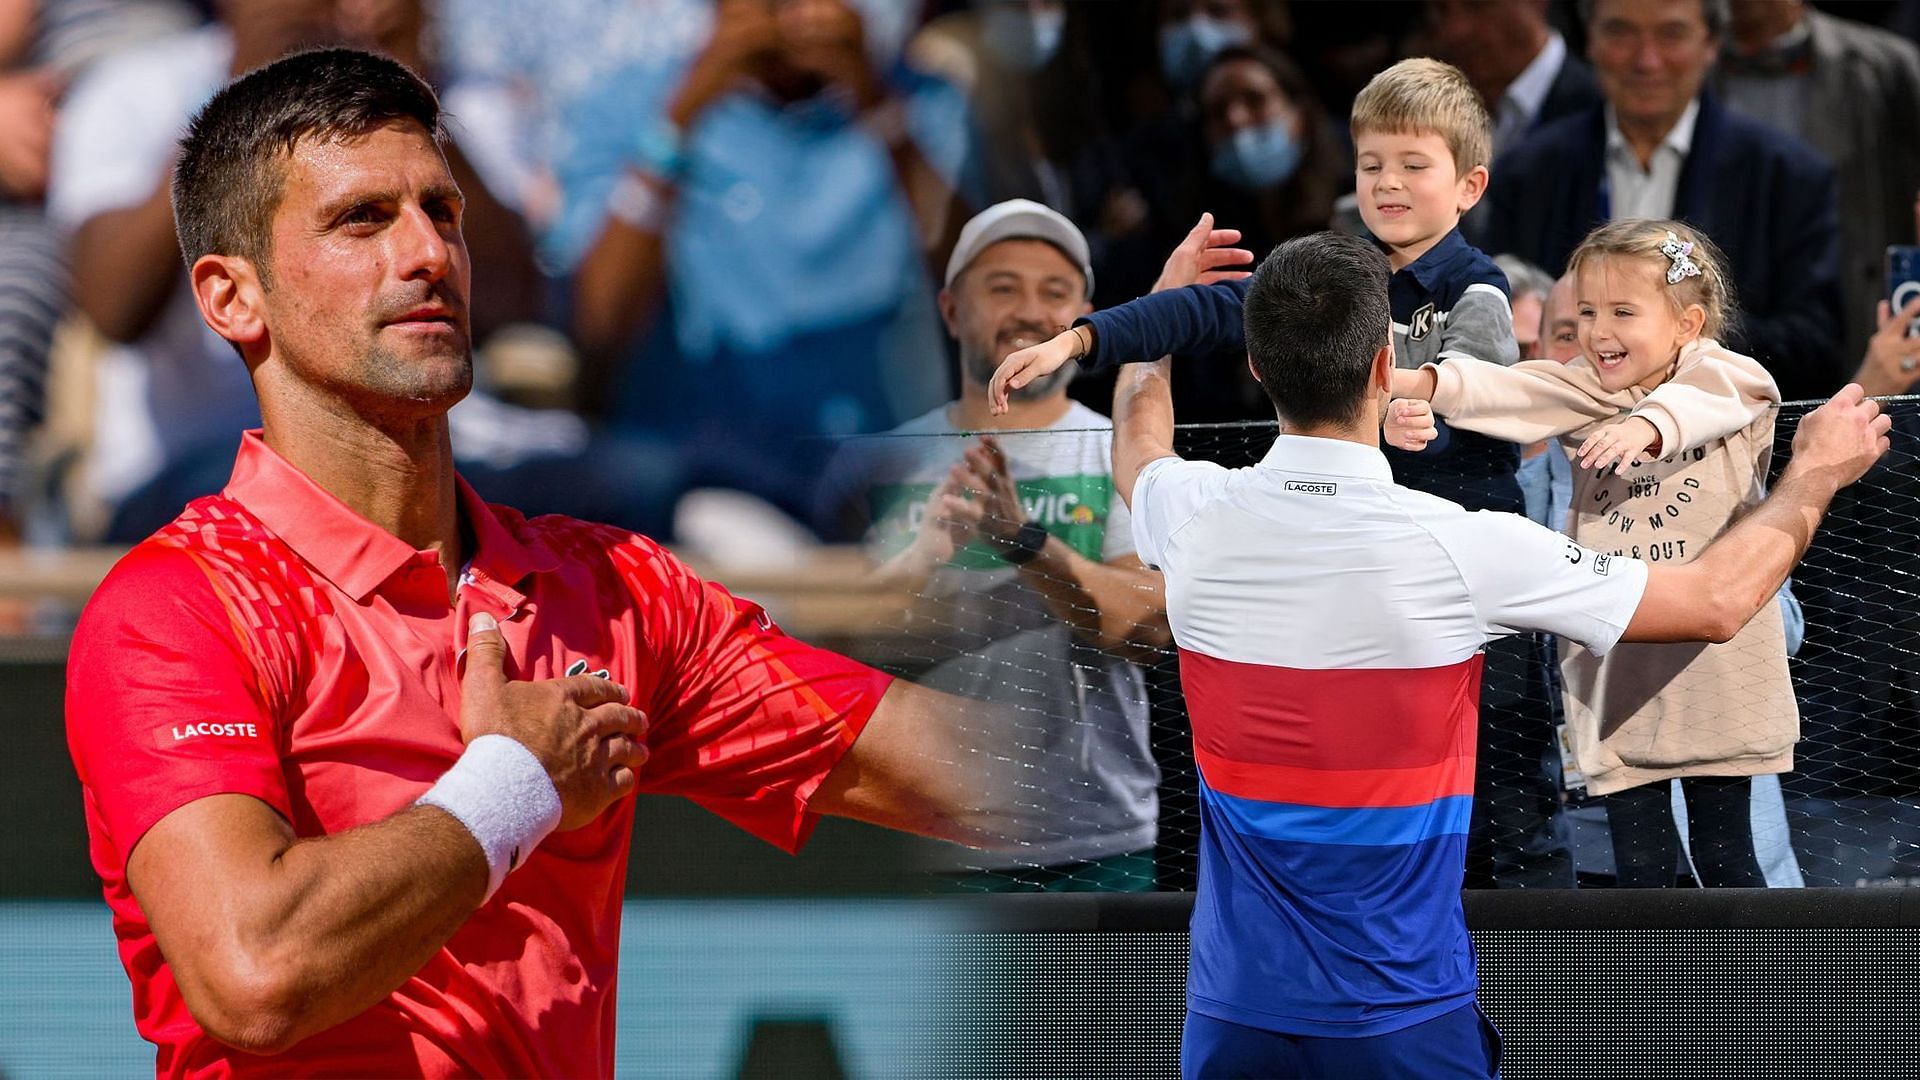 Novak Djokovic shares an adorable moment with his children at Roland Garros 